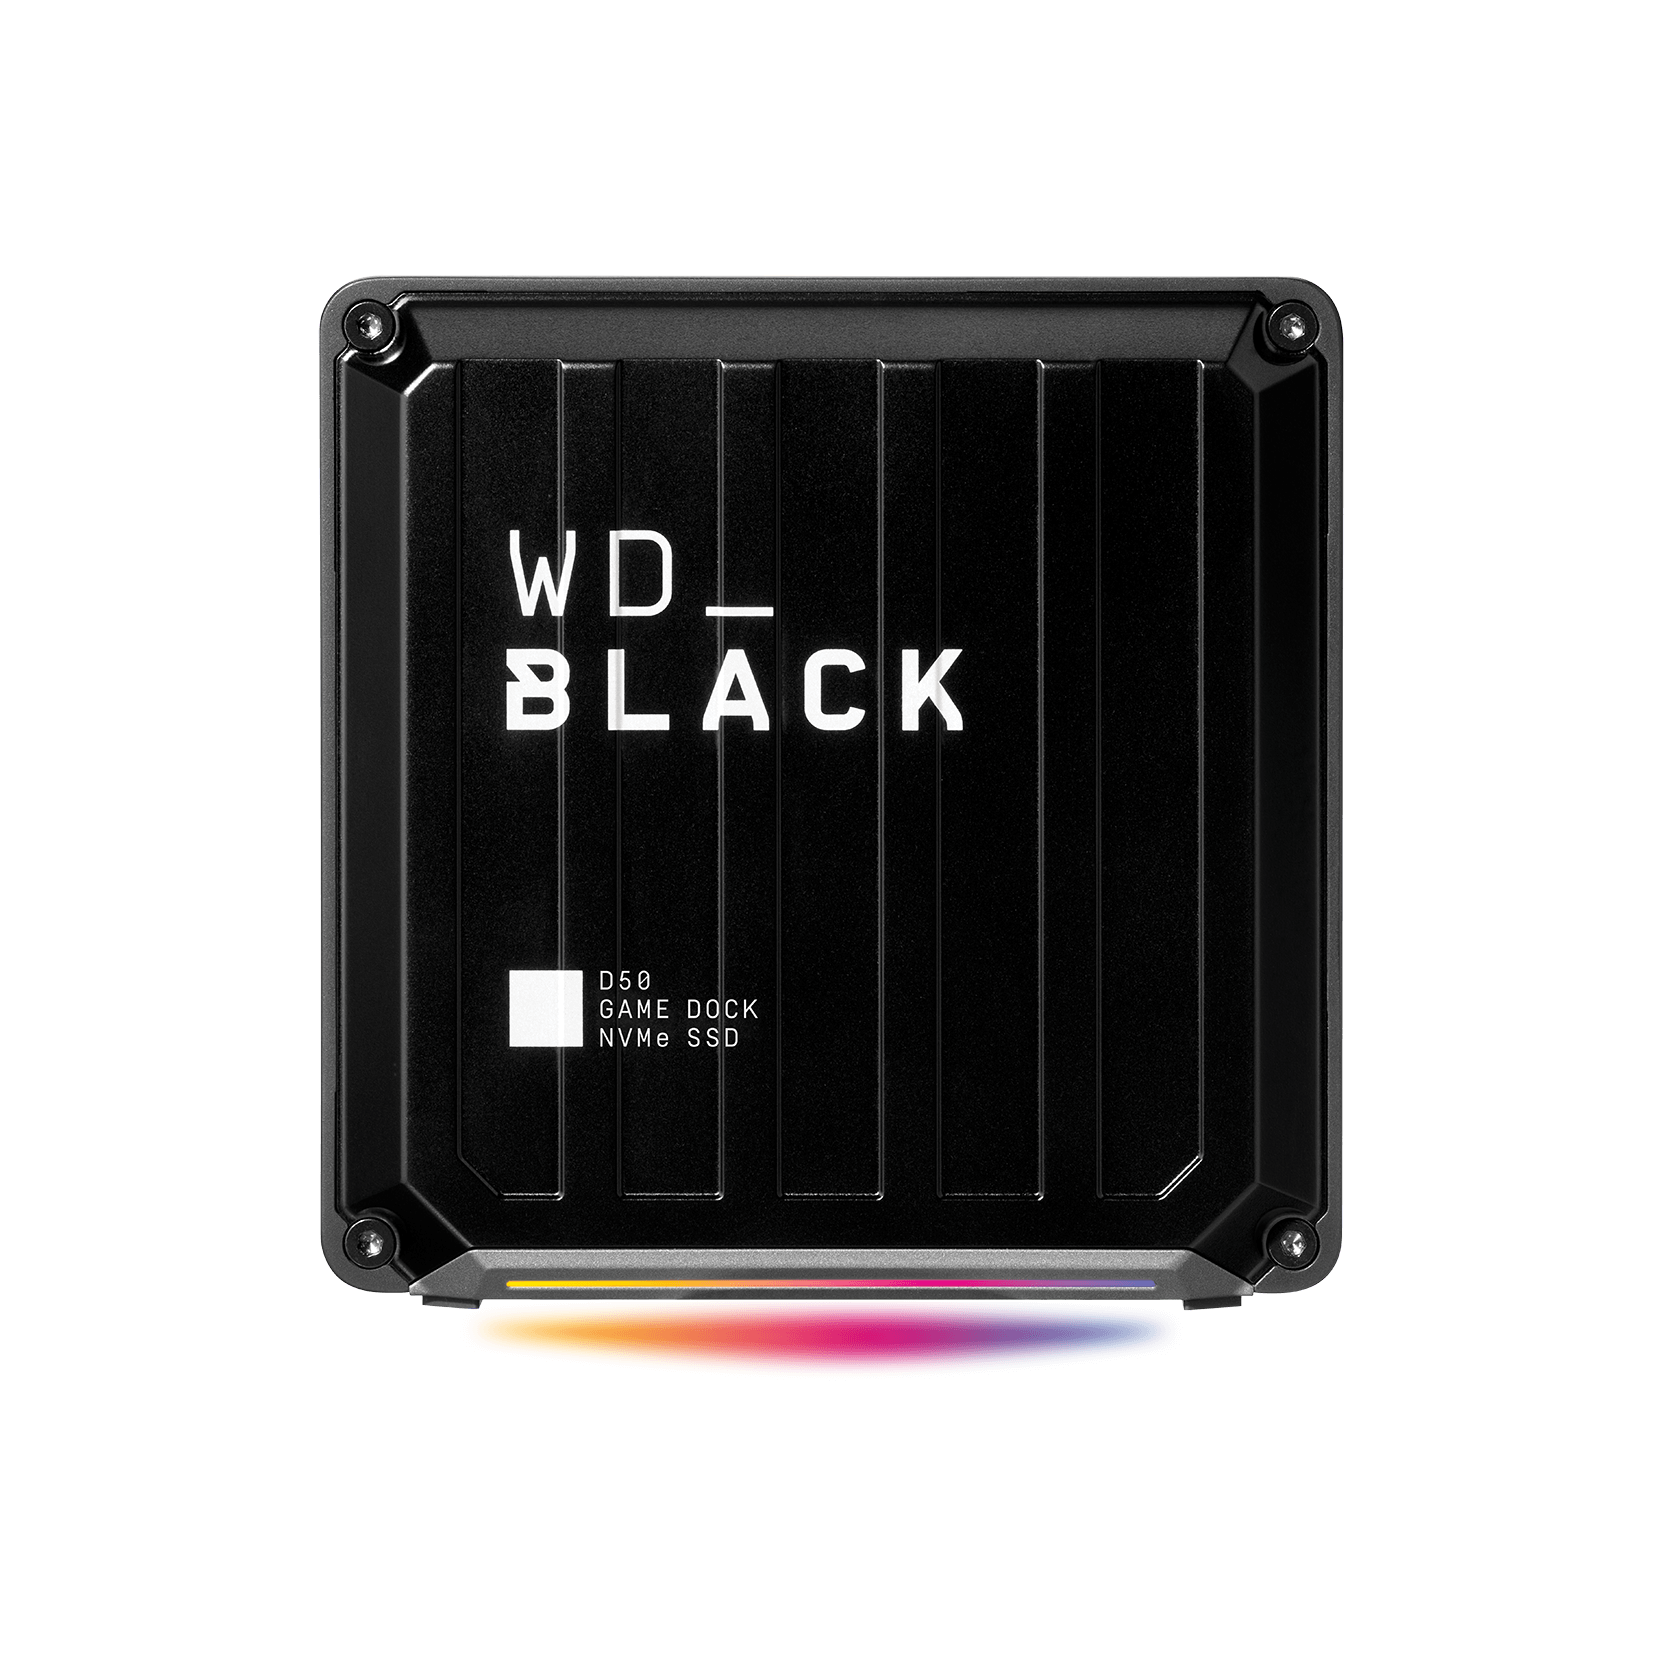 WD_BLACK D50 Game Dock NVMe SSD - 2TB